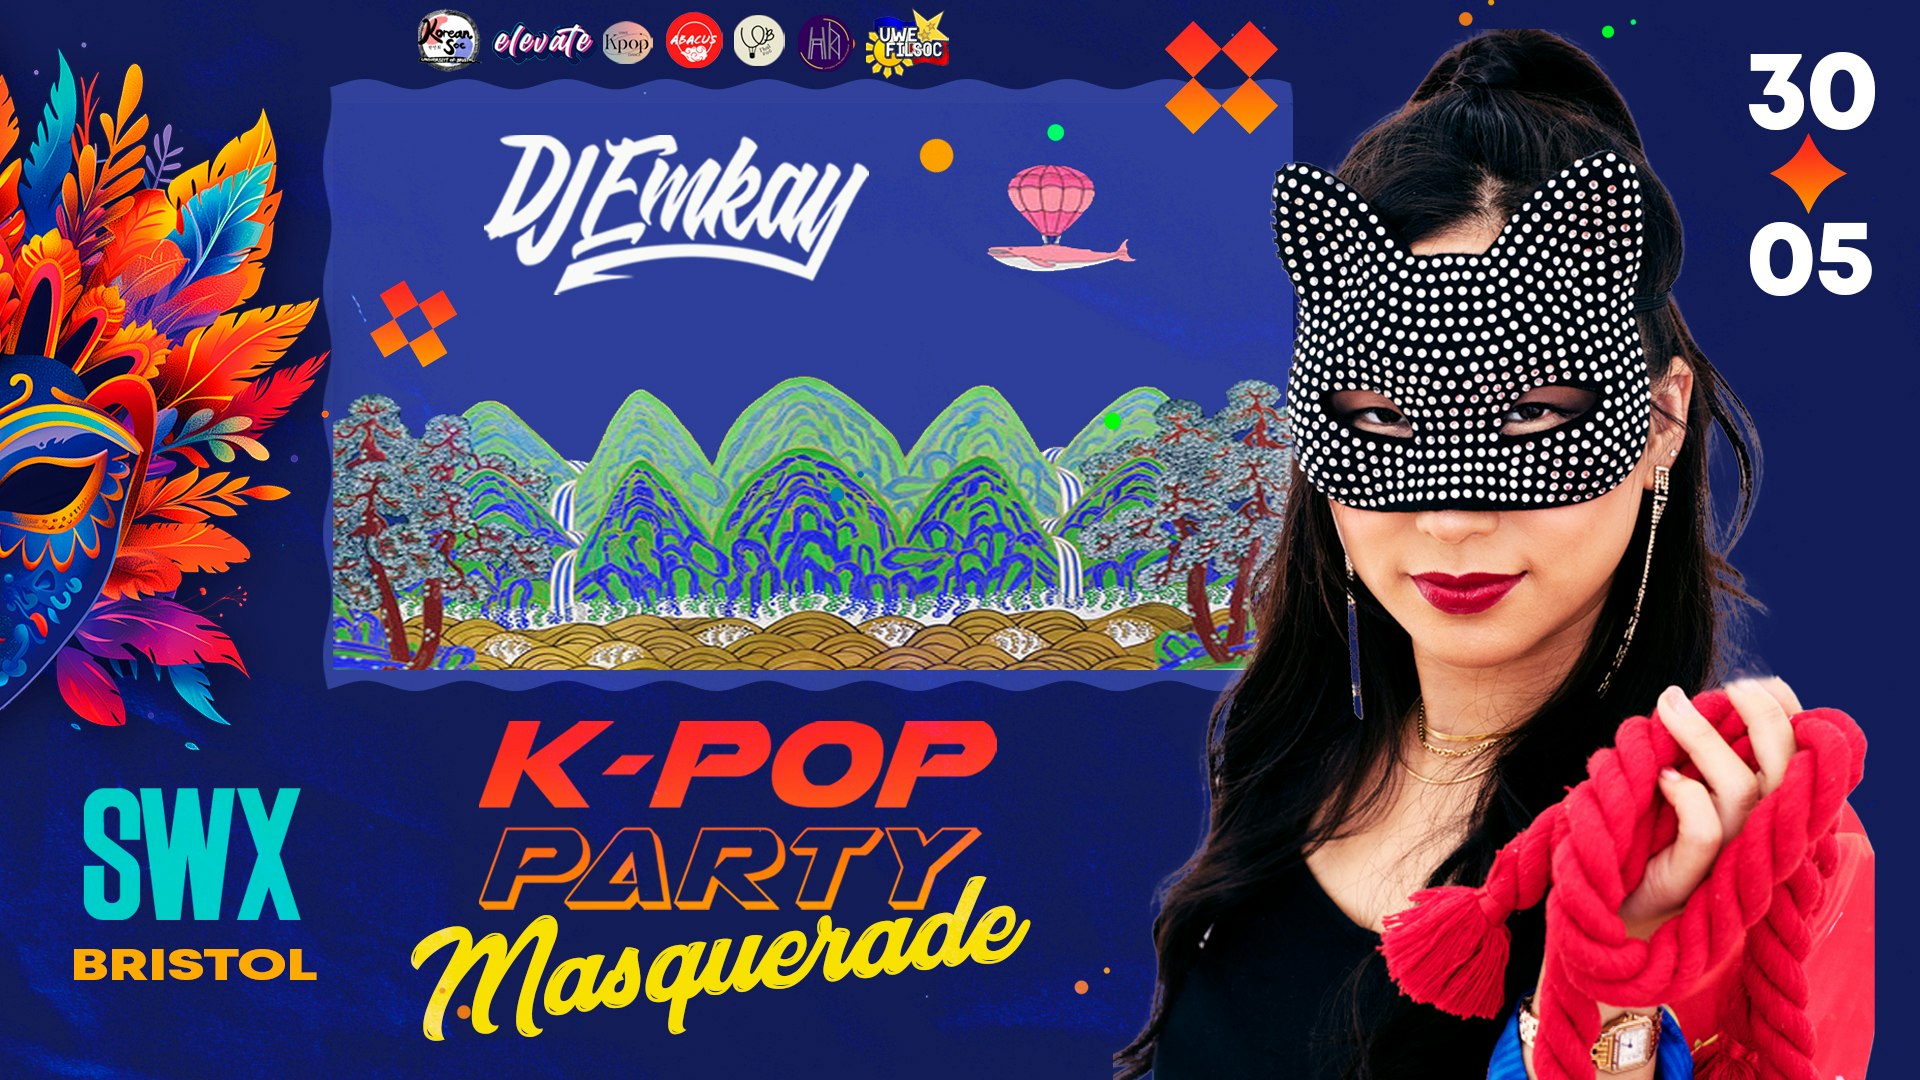 BRISTOL KPOP MASQUERADE PARTY with DJ EMKAY | Thursday 30th May